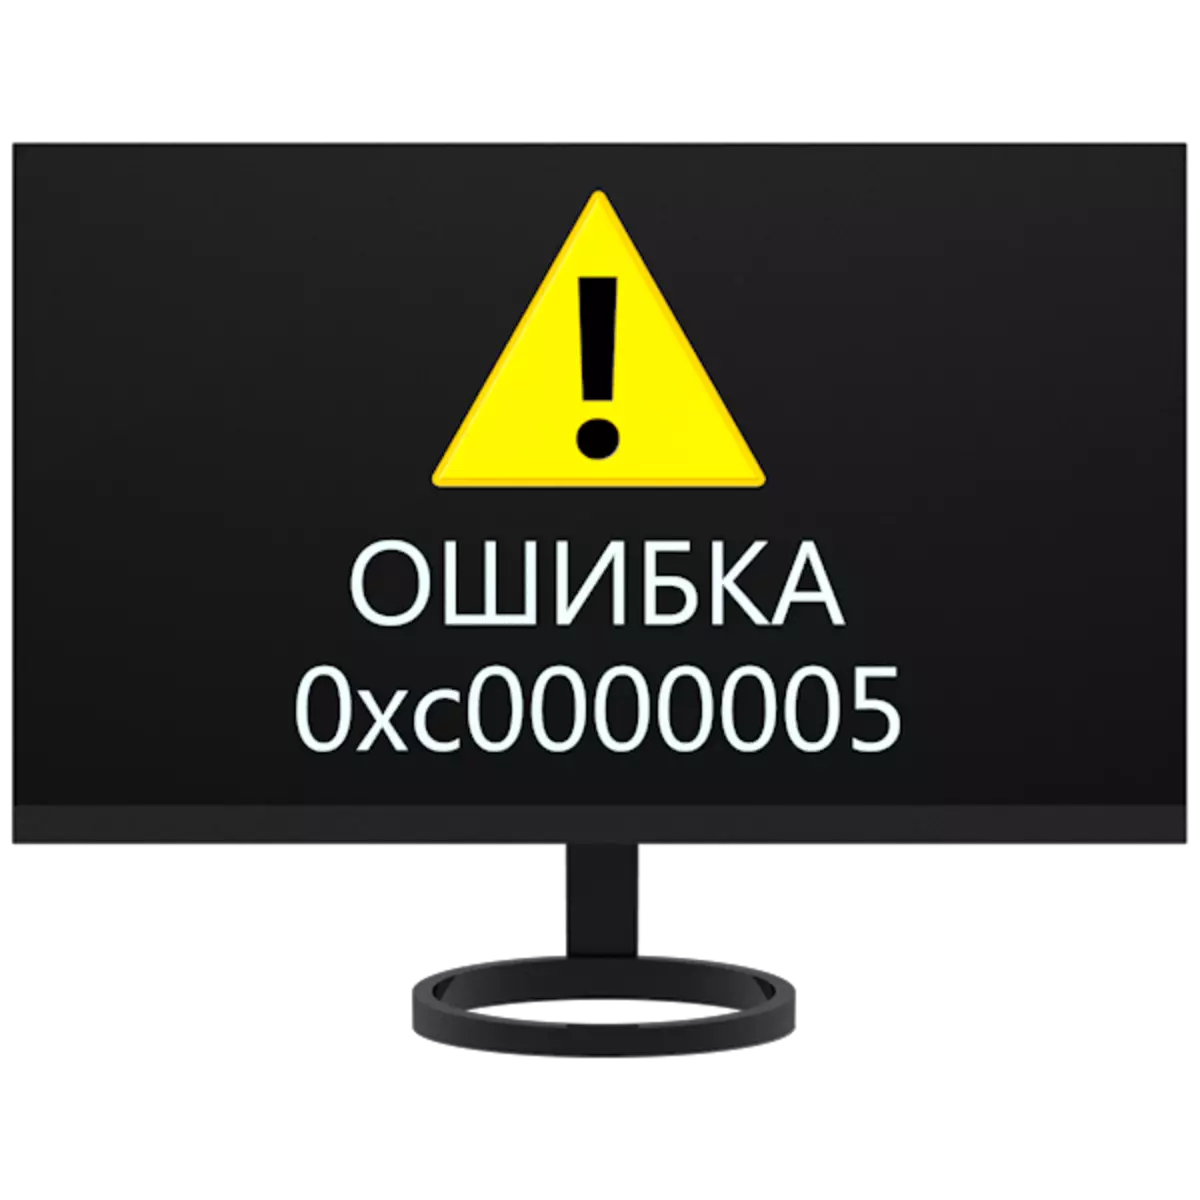 Коригиране на грешки 0xc0000005 в Windows 7